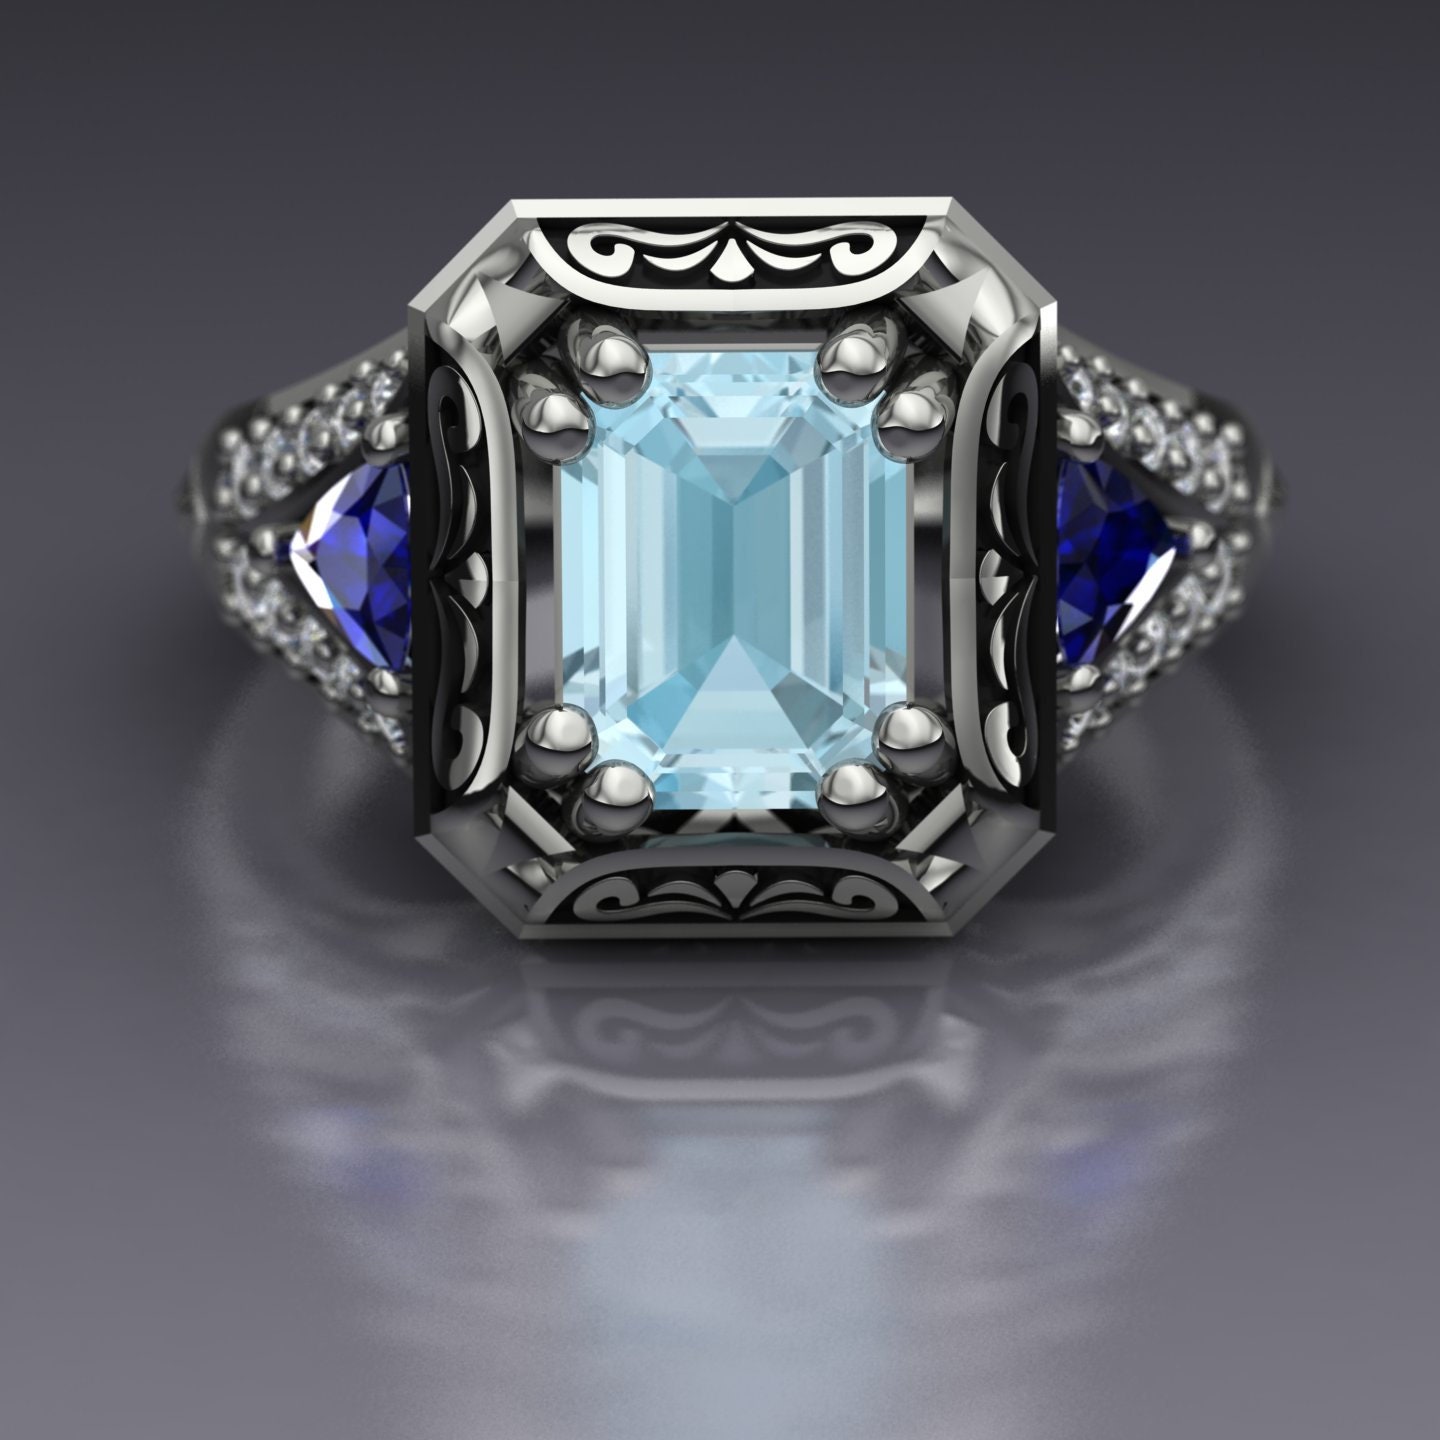 Emerald Cut Aquamarine and Blue White 14k Design Österreich in Charles by Trillions Split Babb Gold Sapphire Original Diamond An Shank Etsy Ring 